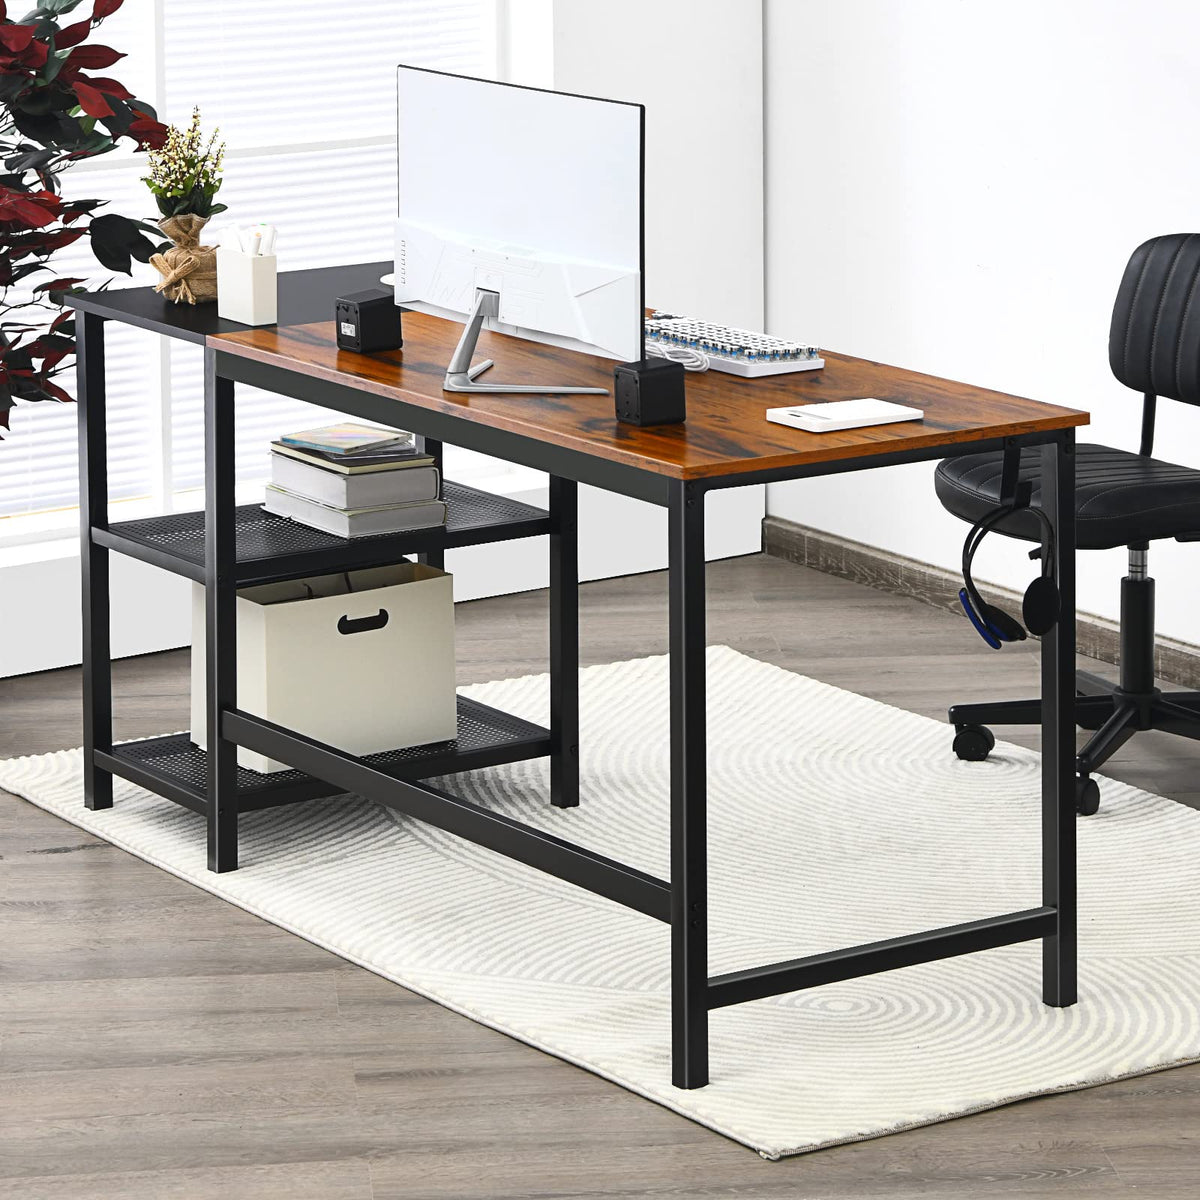 Giantex Industrial Computer Desk, 150cm Large Writing Workstation with 2-Tier Storage Shelf & Headphone Hook